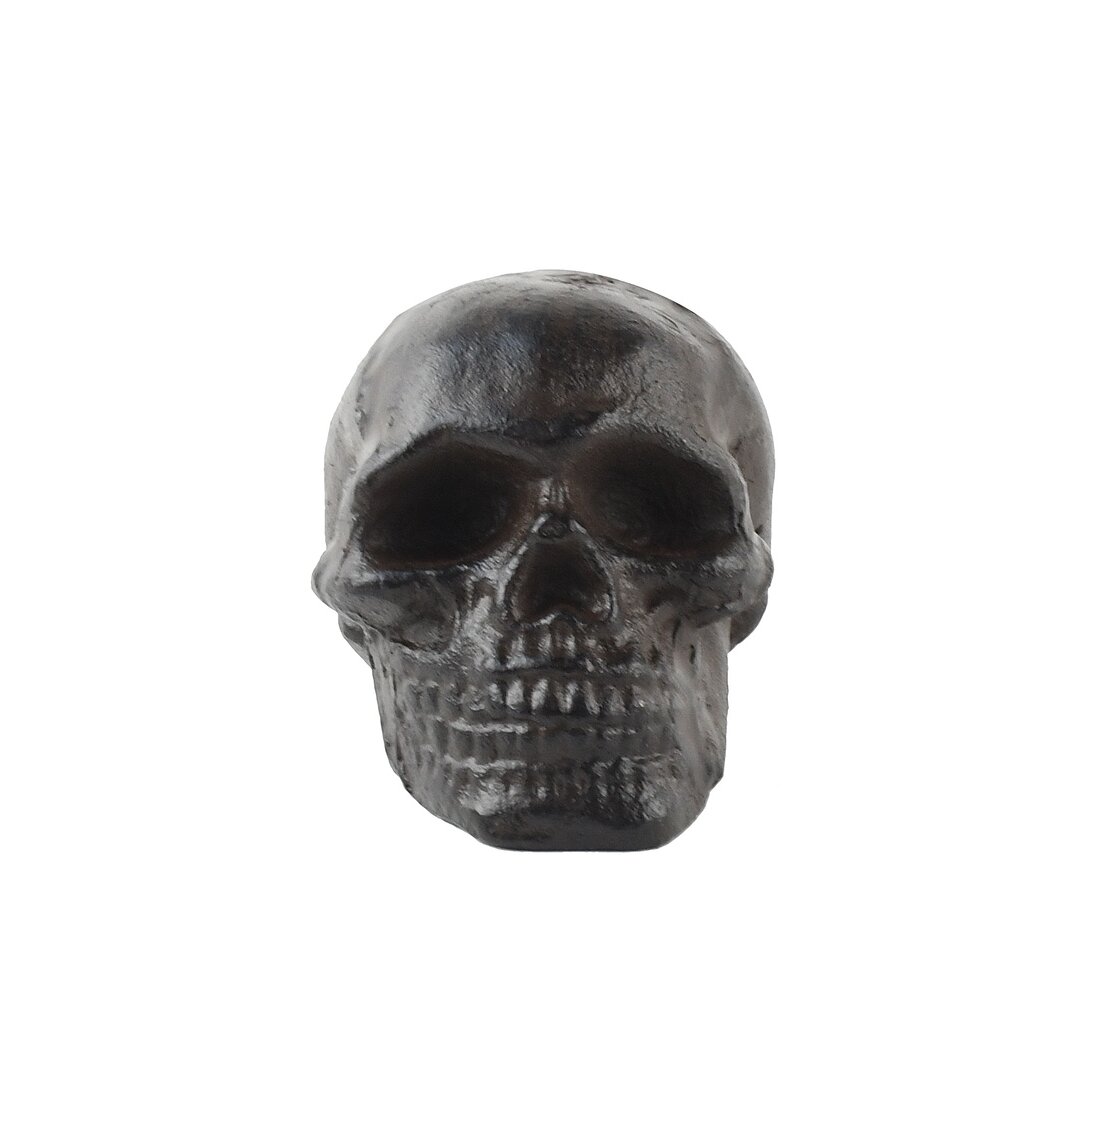 NEW~Cast Iron Skull Paperweight Figurine~Halloween~Creepy Decor 